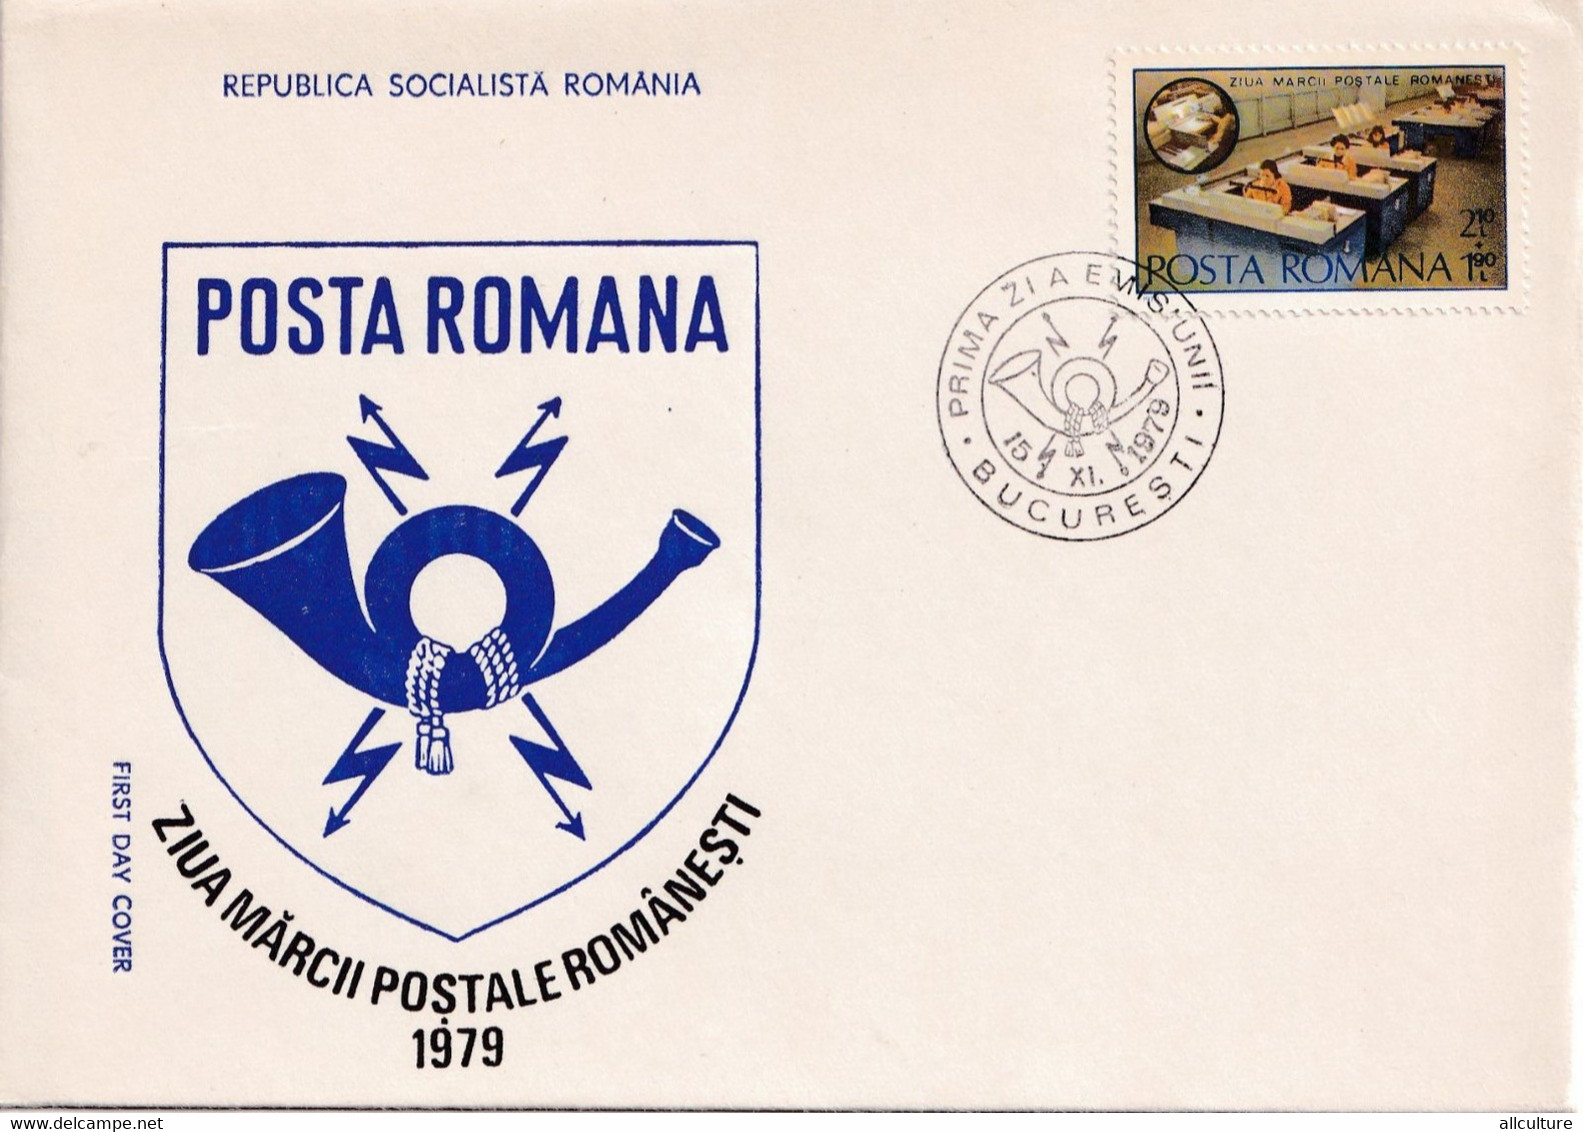 A2663- Ziua Marcii Postale Romanesti 1979, Posta Romana, Republica Socialista Romania, Bucuresti 1979  FDC - FDC